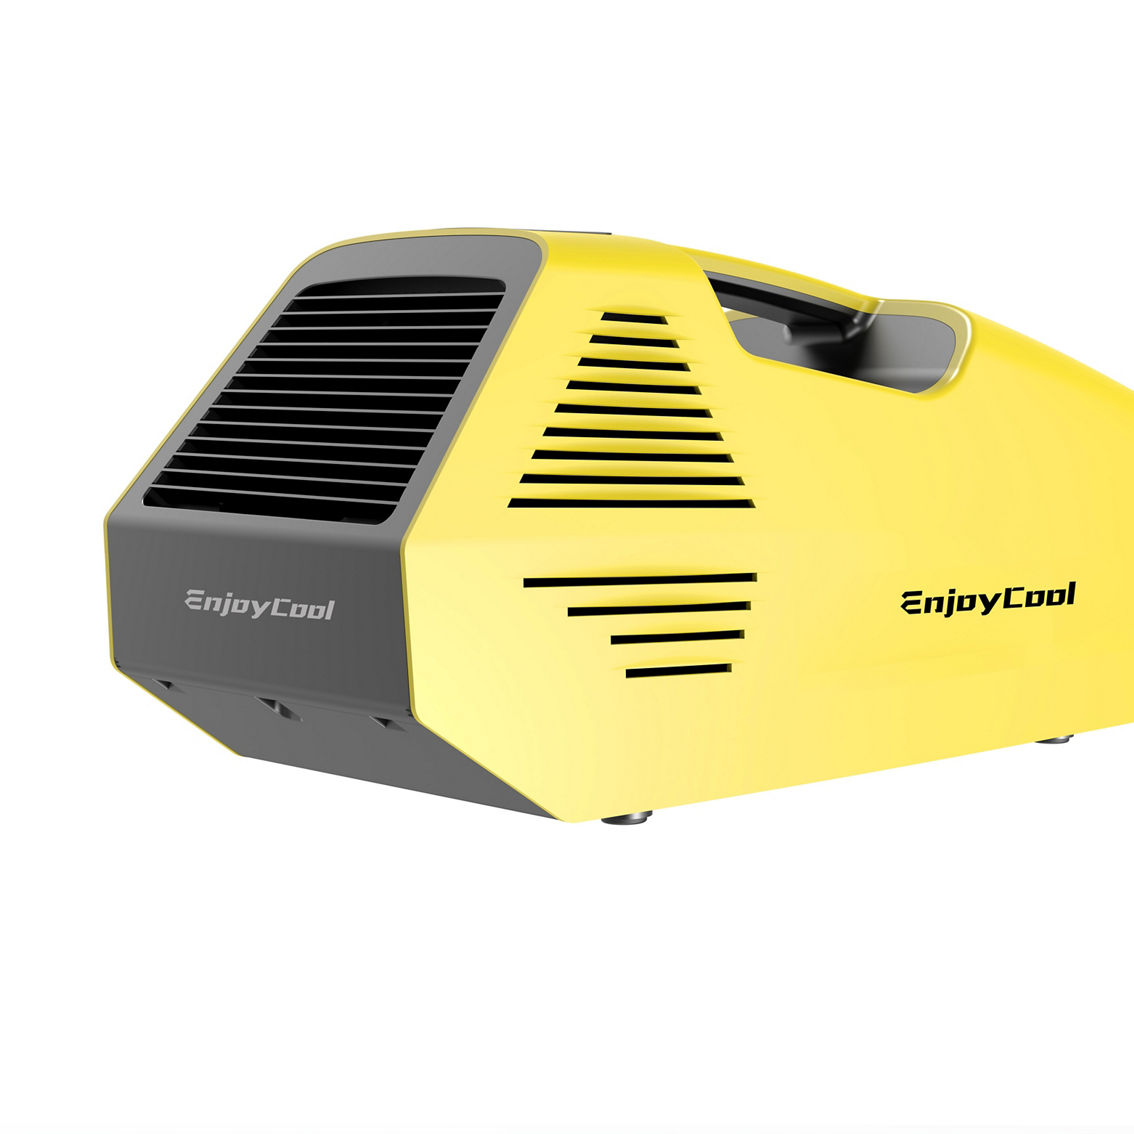 Enjoycool 2380 BTU Portable Air Conditioner - Yellow - Image 4 of 5